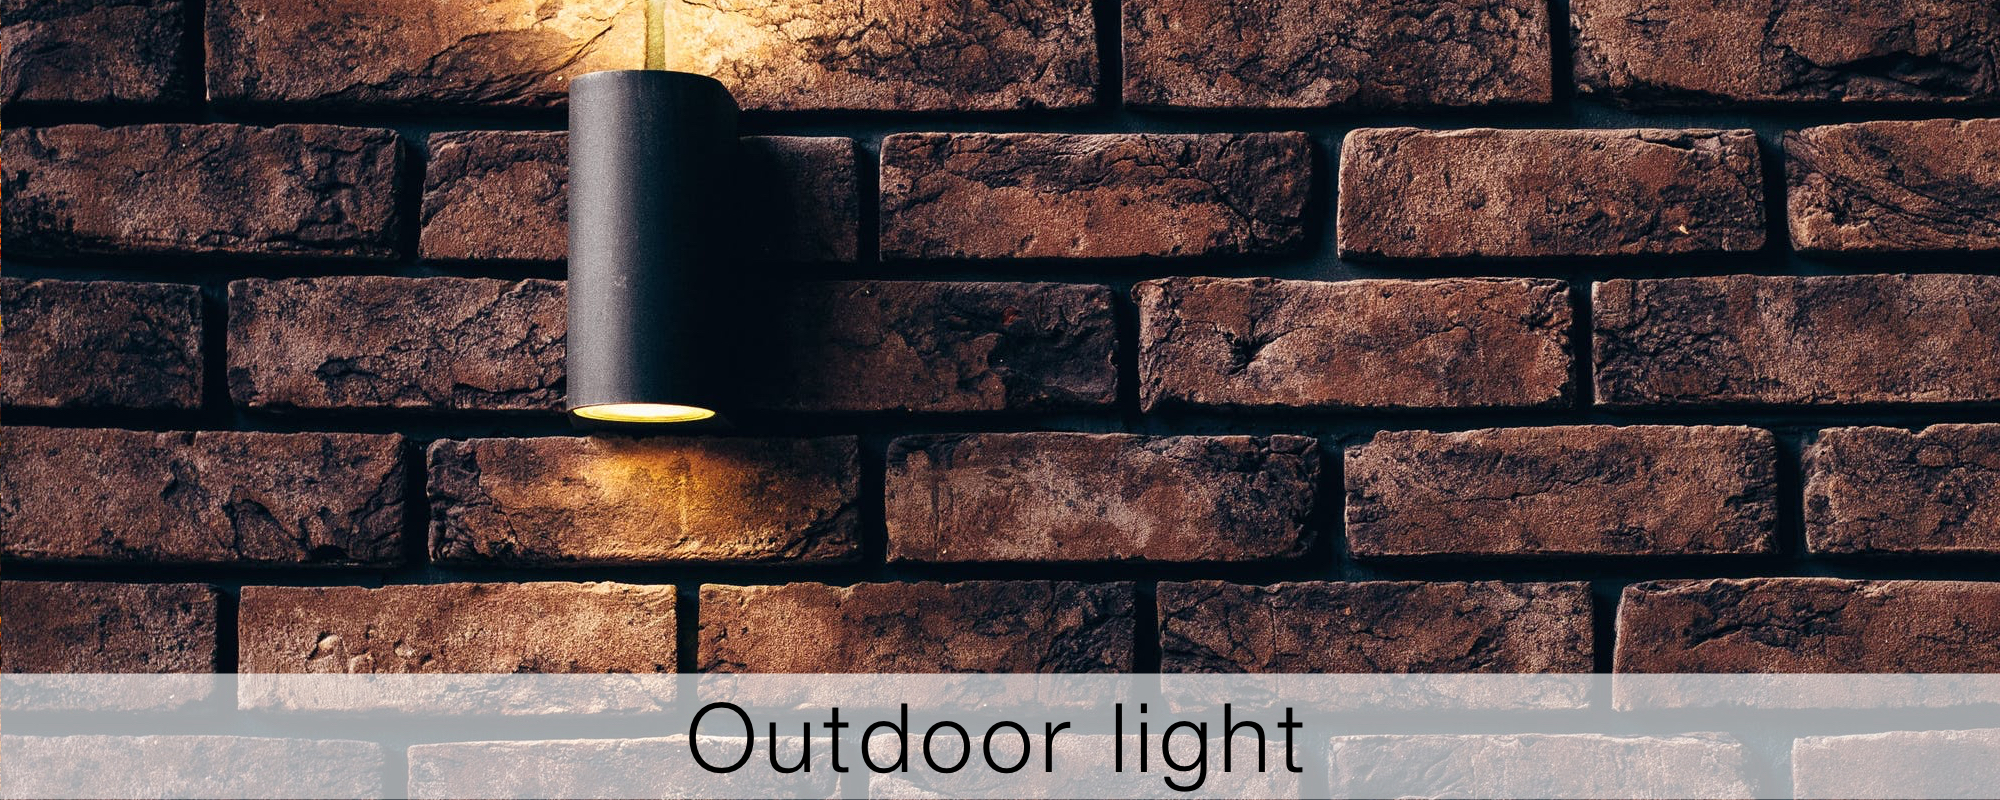 Outdoor light